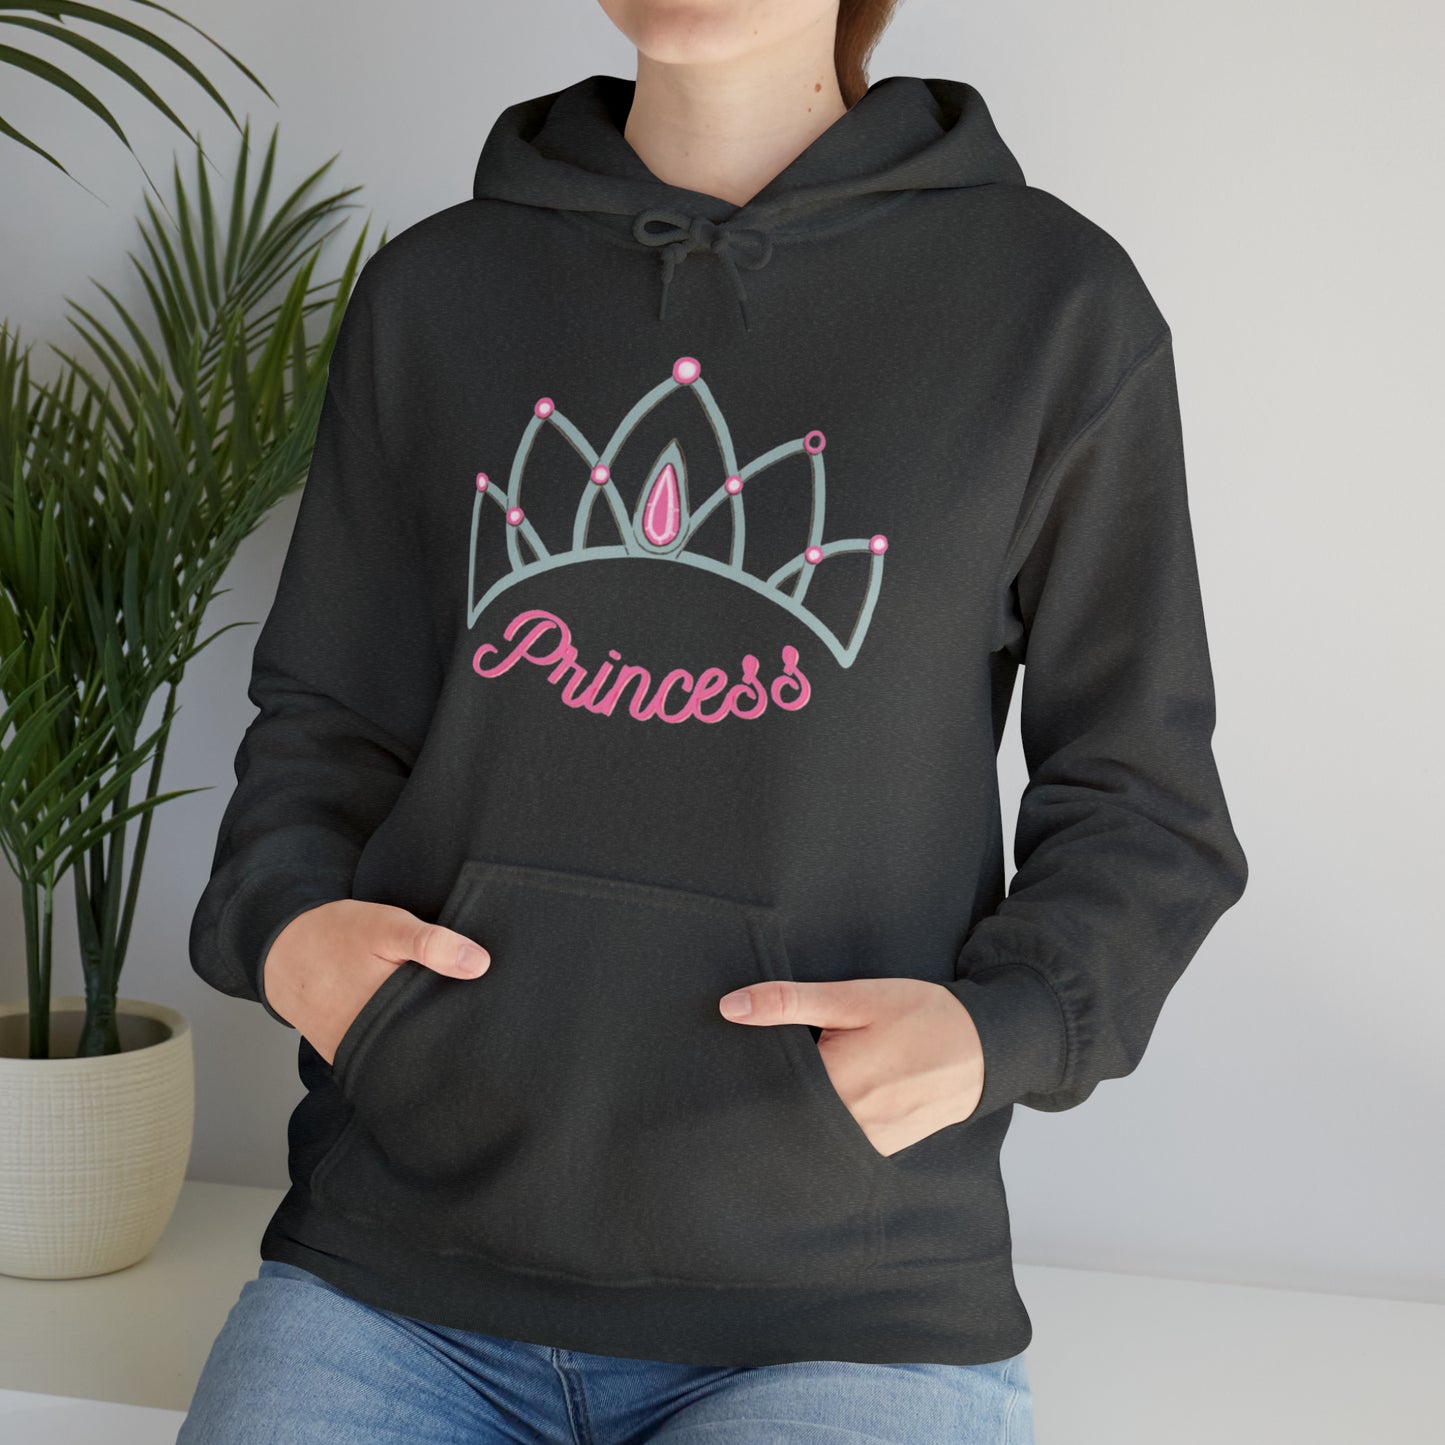 Princess Unisex Hooded Sweatshirt